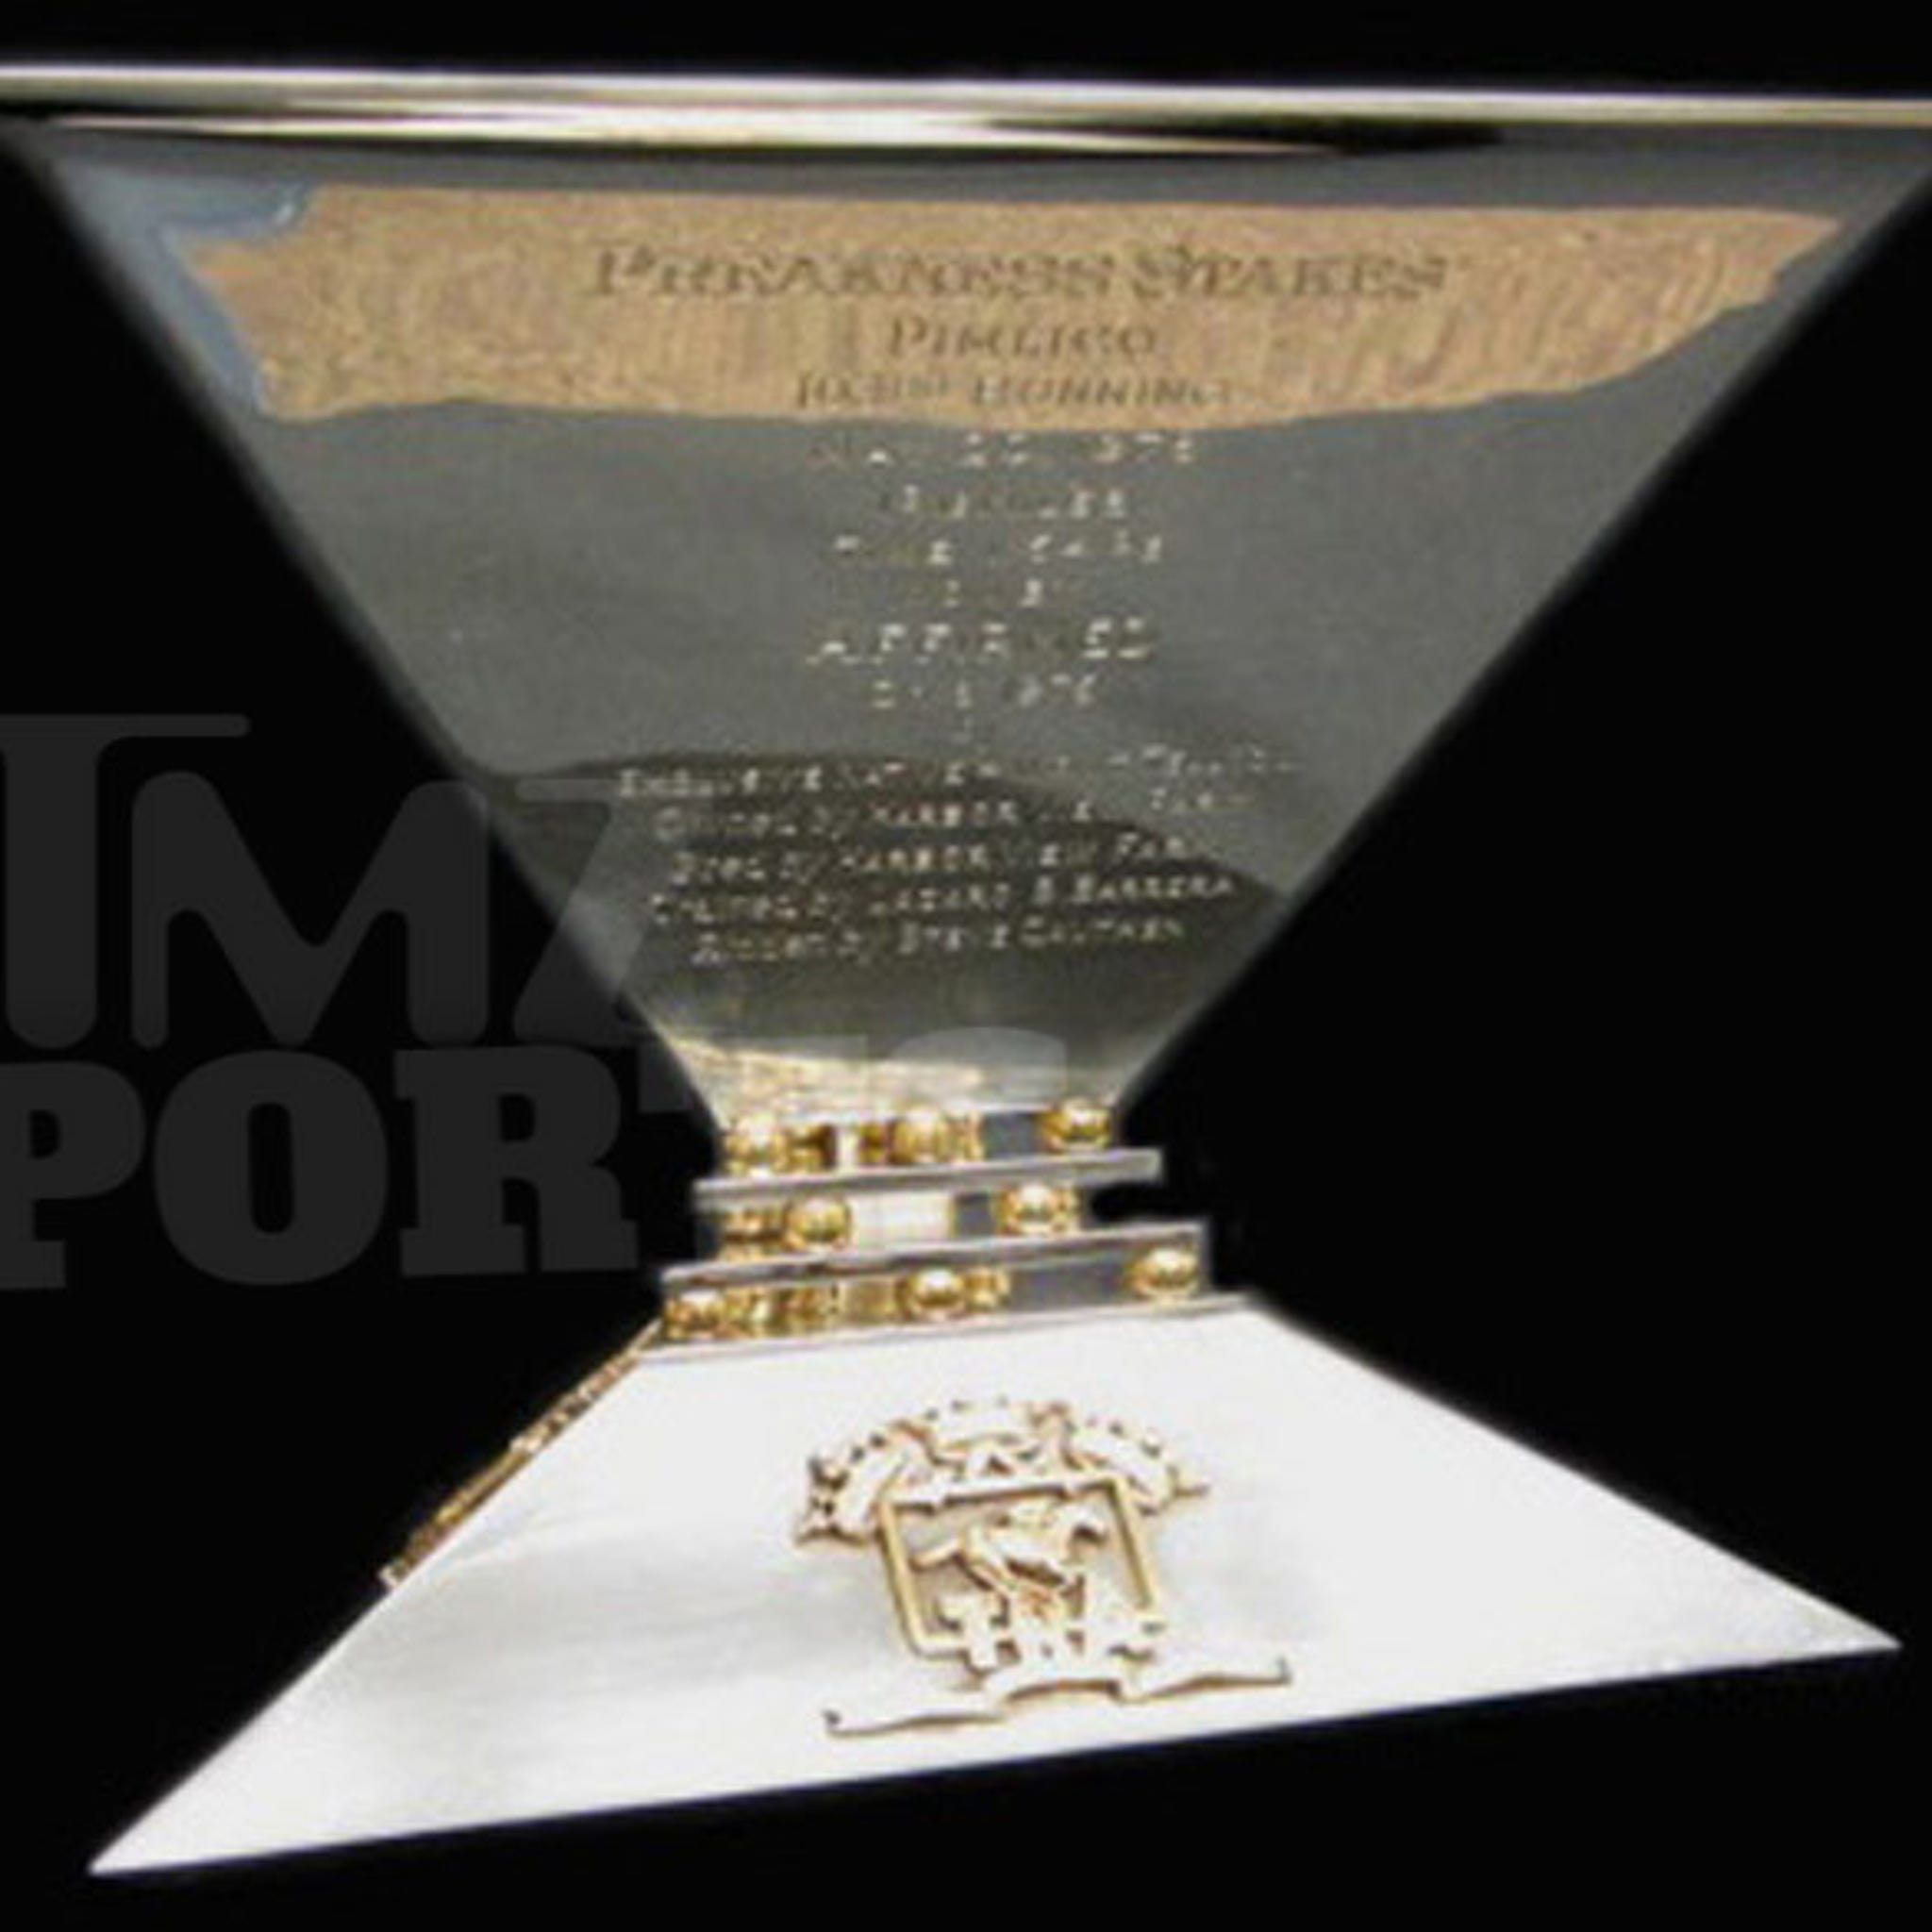 horse triple crown trophy